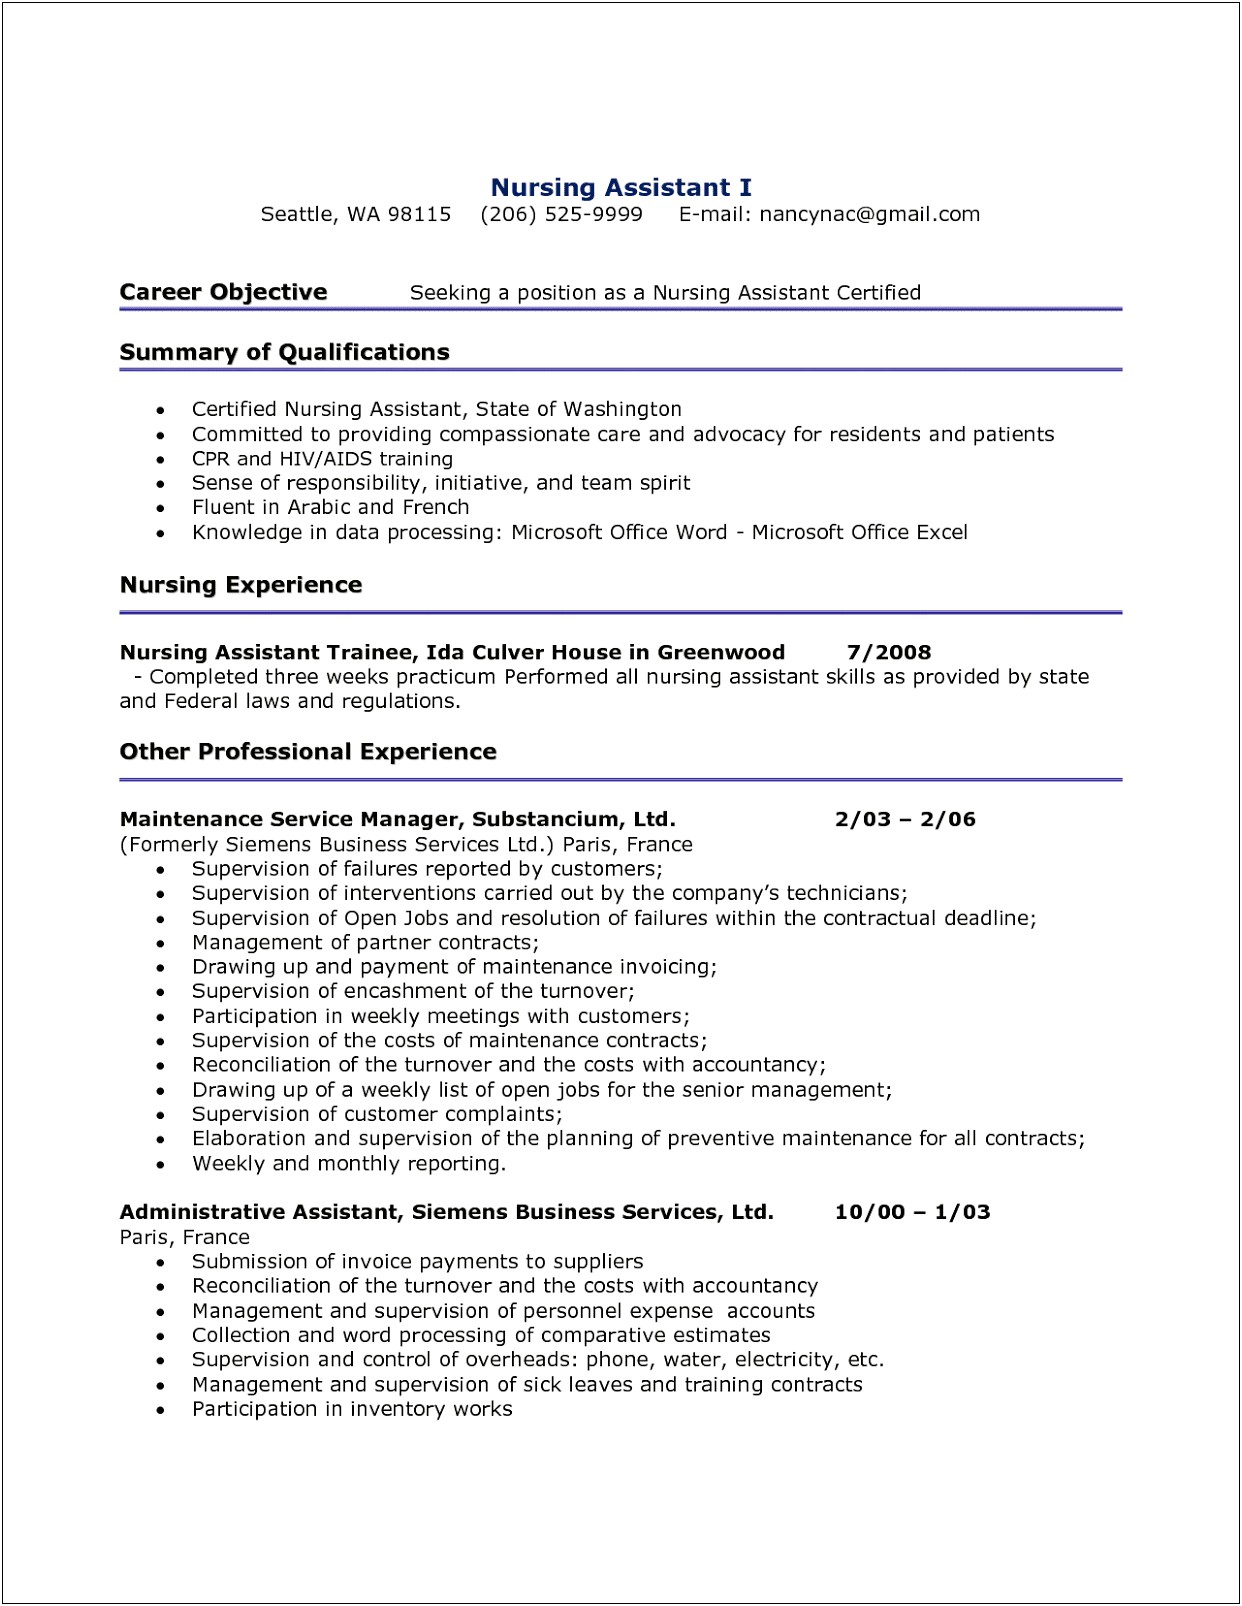 Personal Resume Sample In Assistant In Nursing